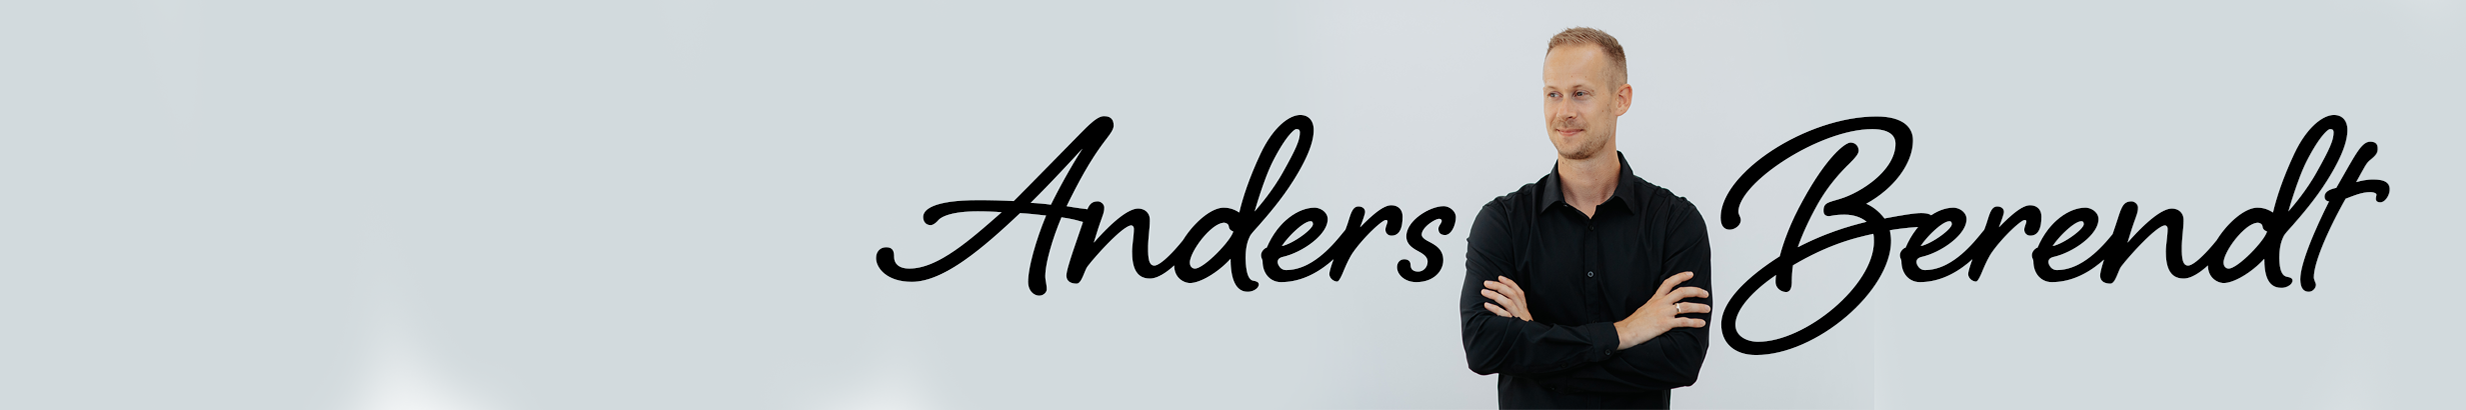 Anders Berendt's profile banner